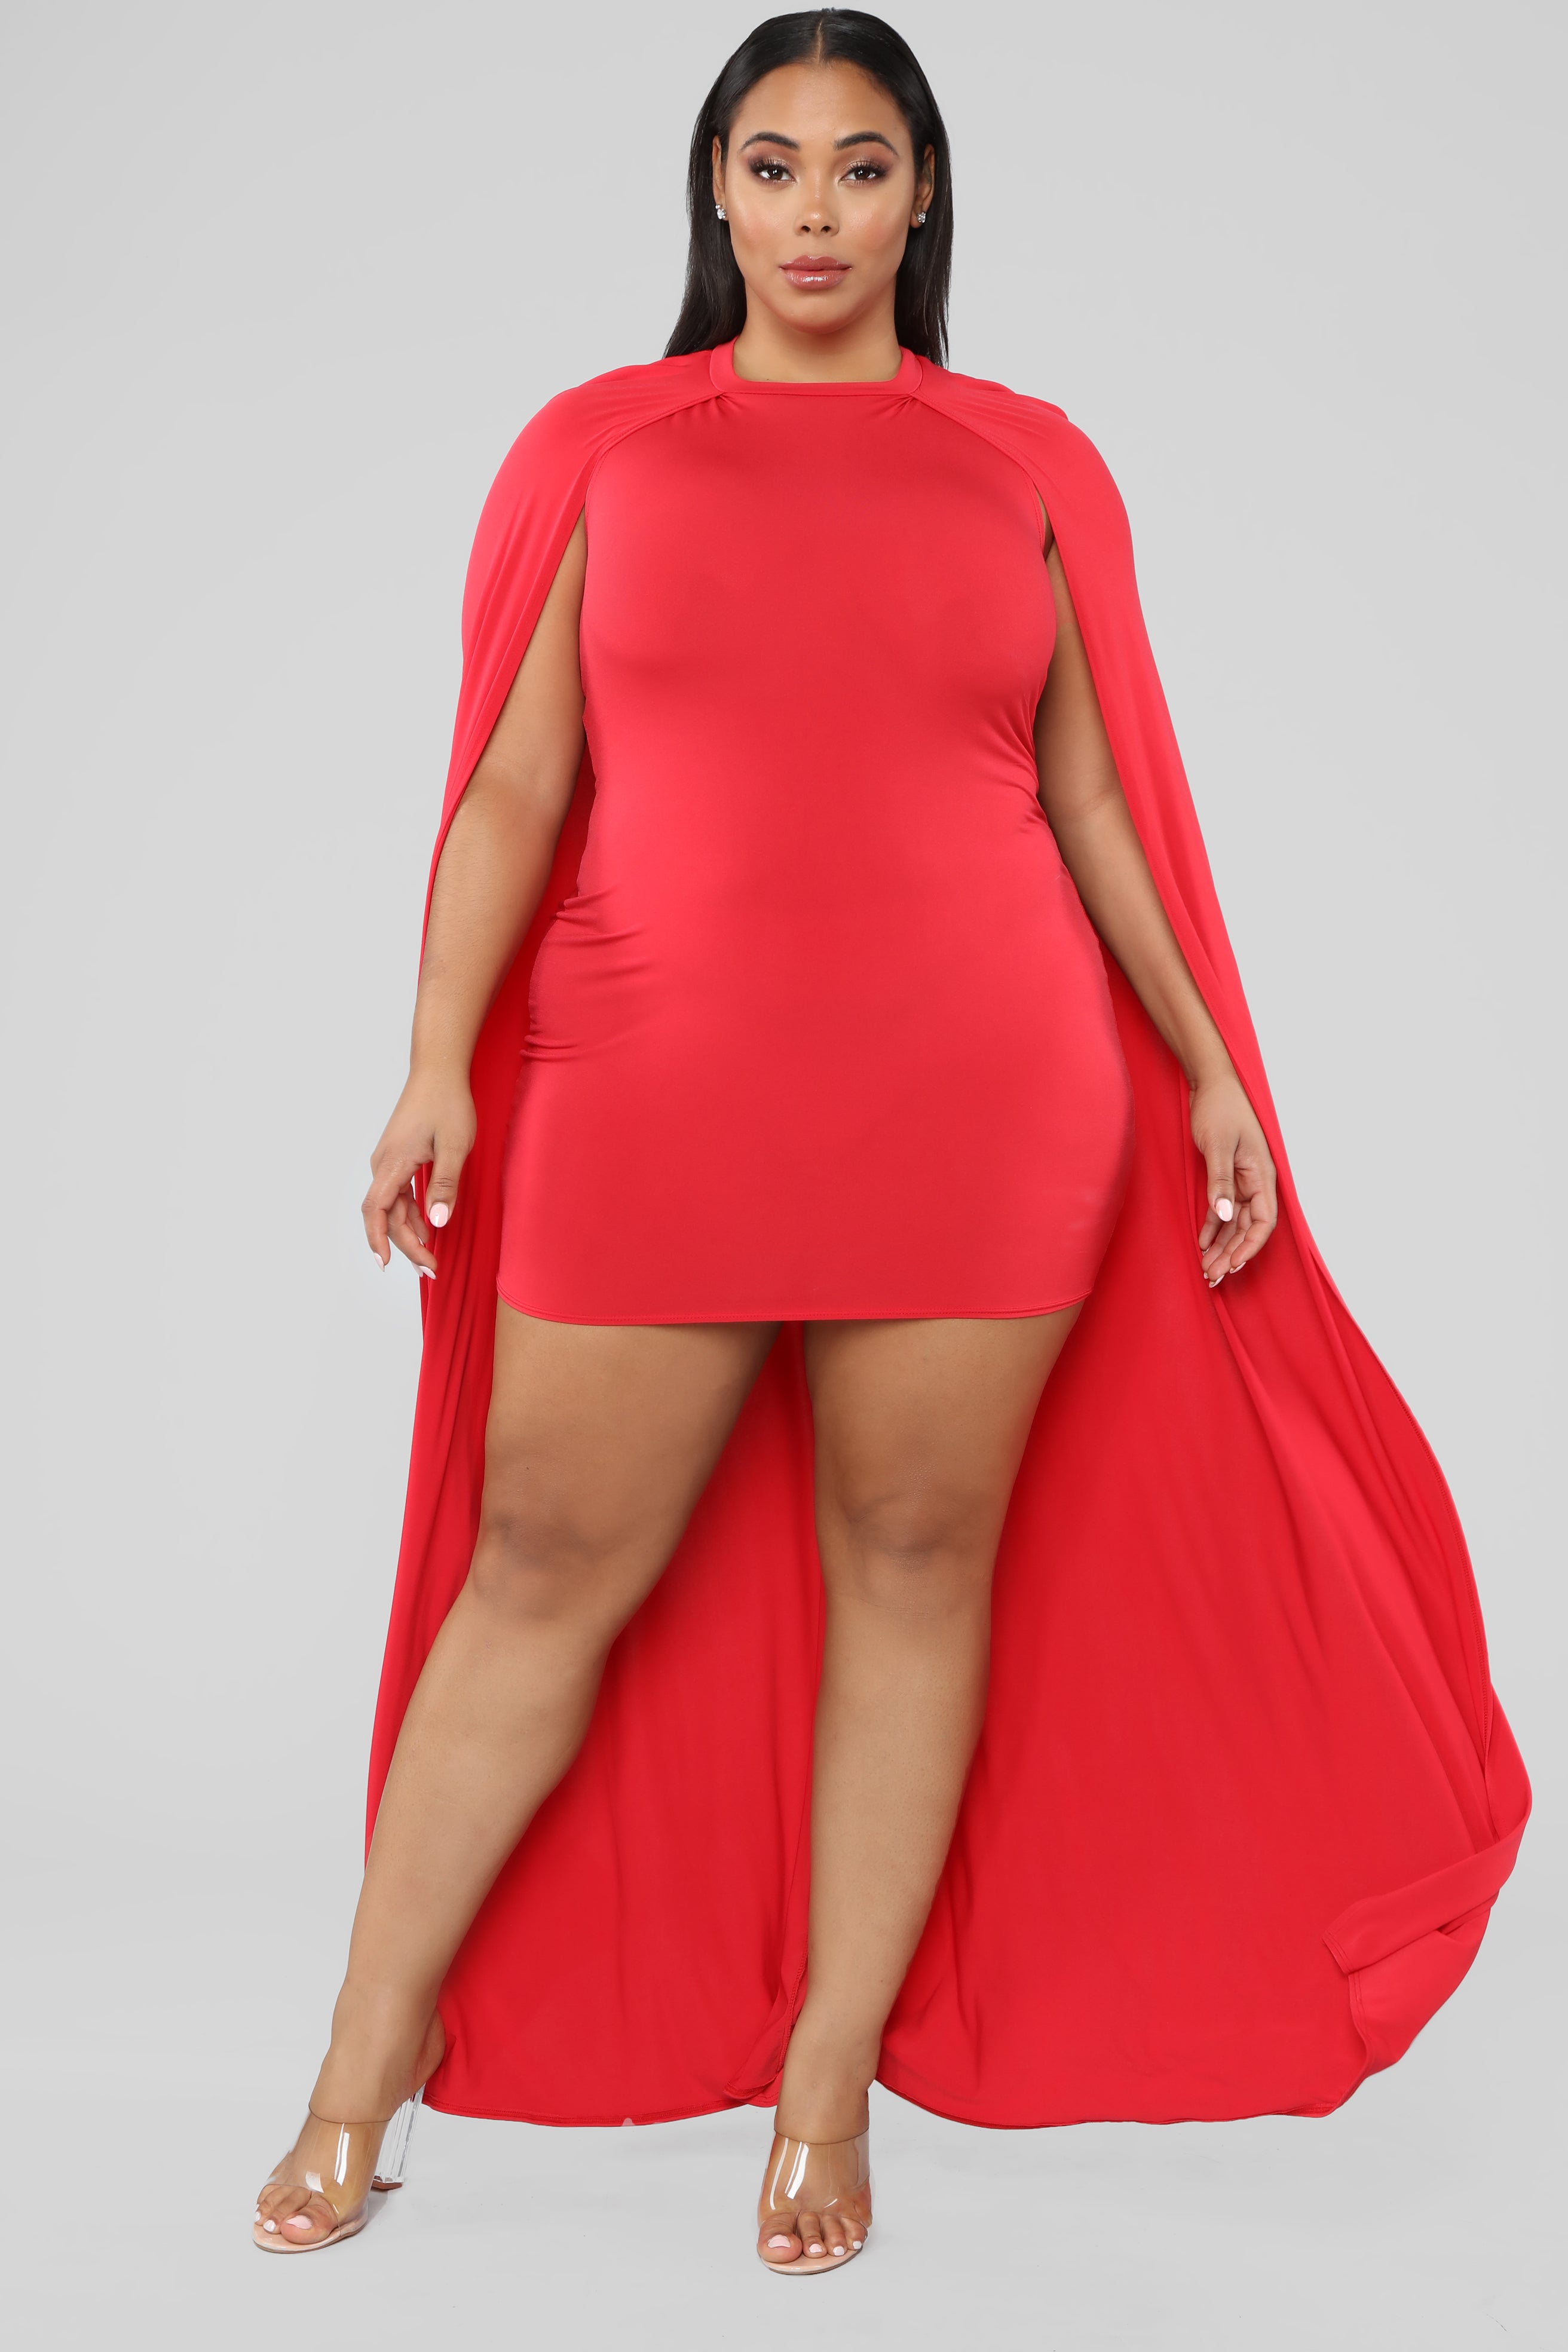 La Diva Dress - Red | Dresses Fashion